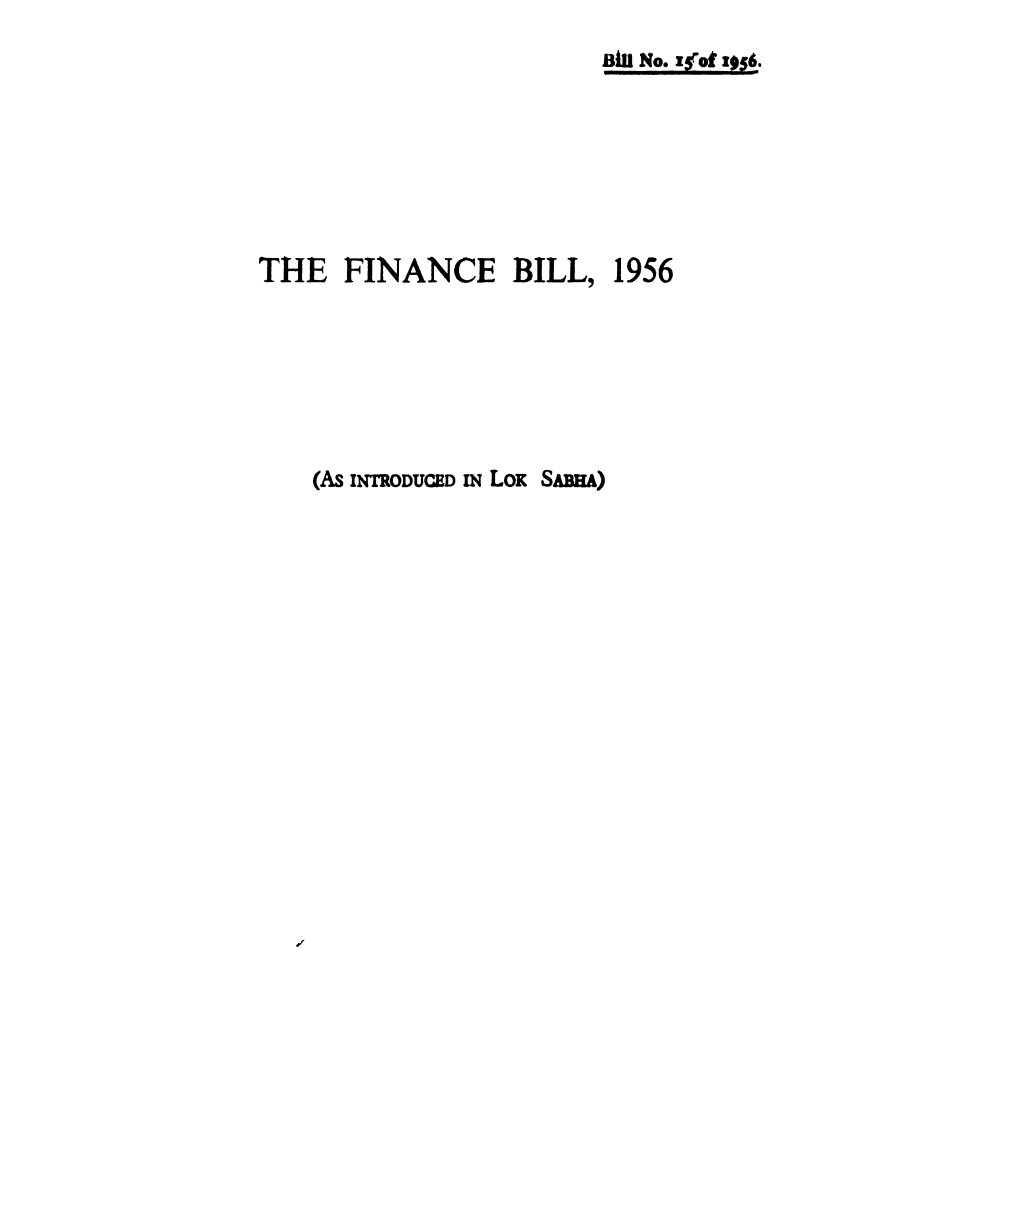 The Finance Bill, 1956